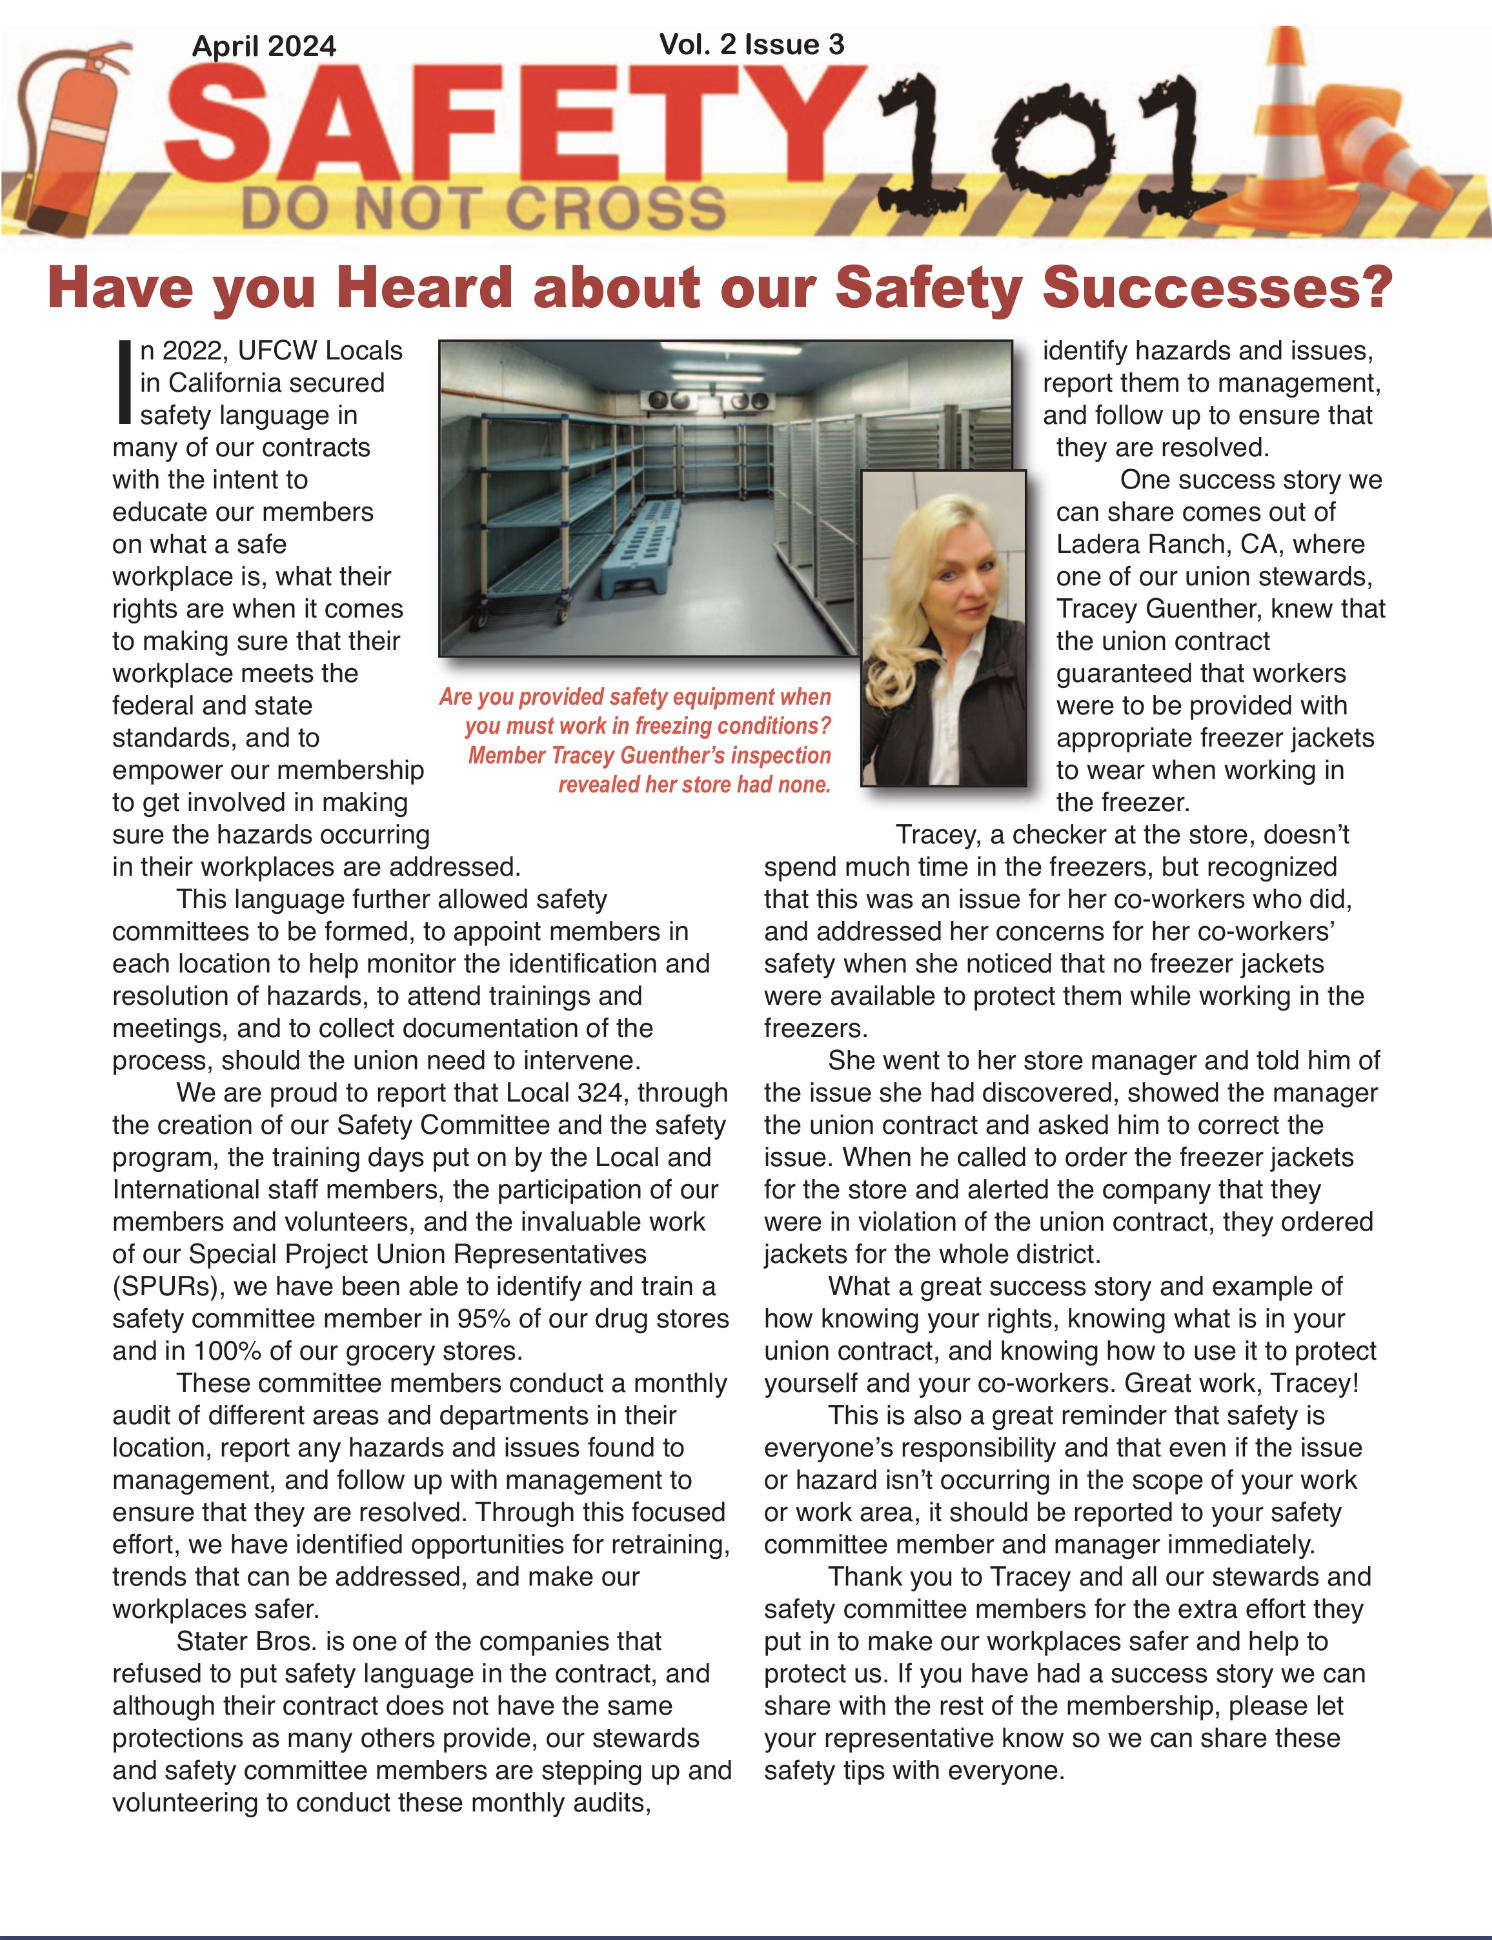 Safety 101 Newsletter-April 2024